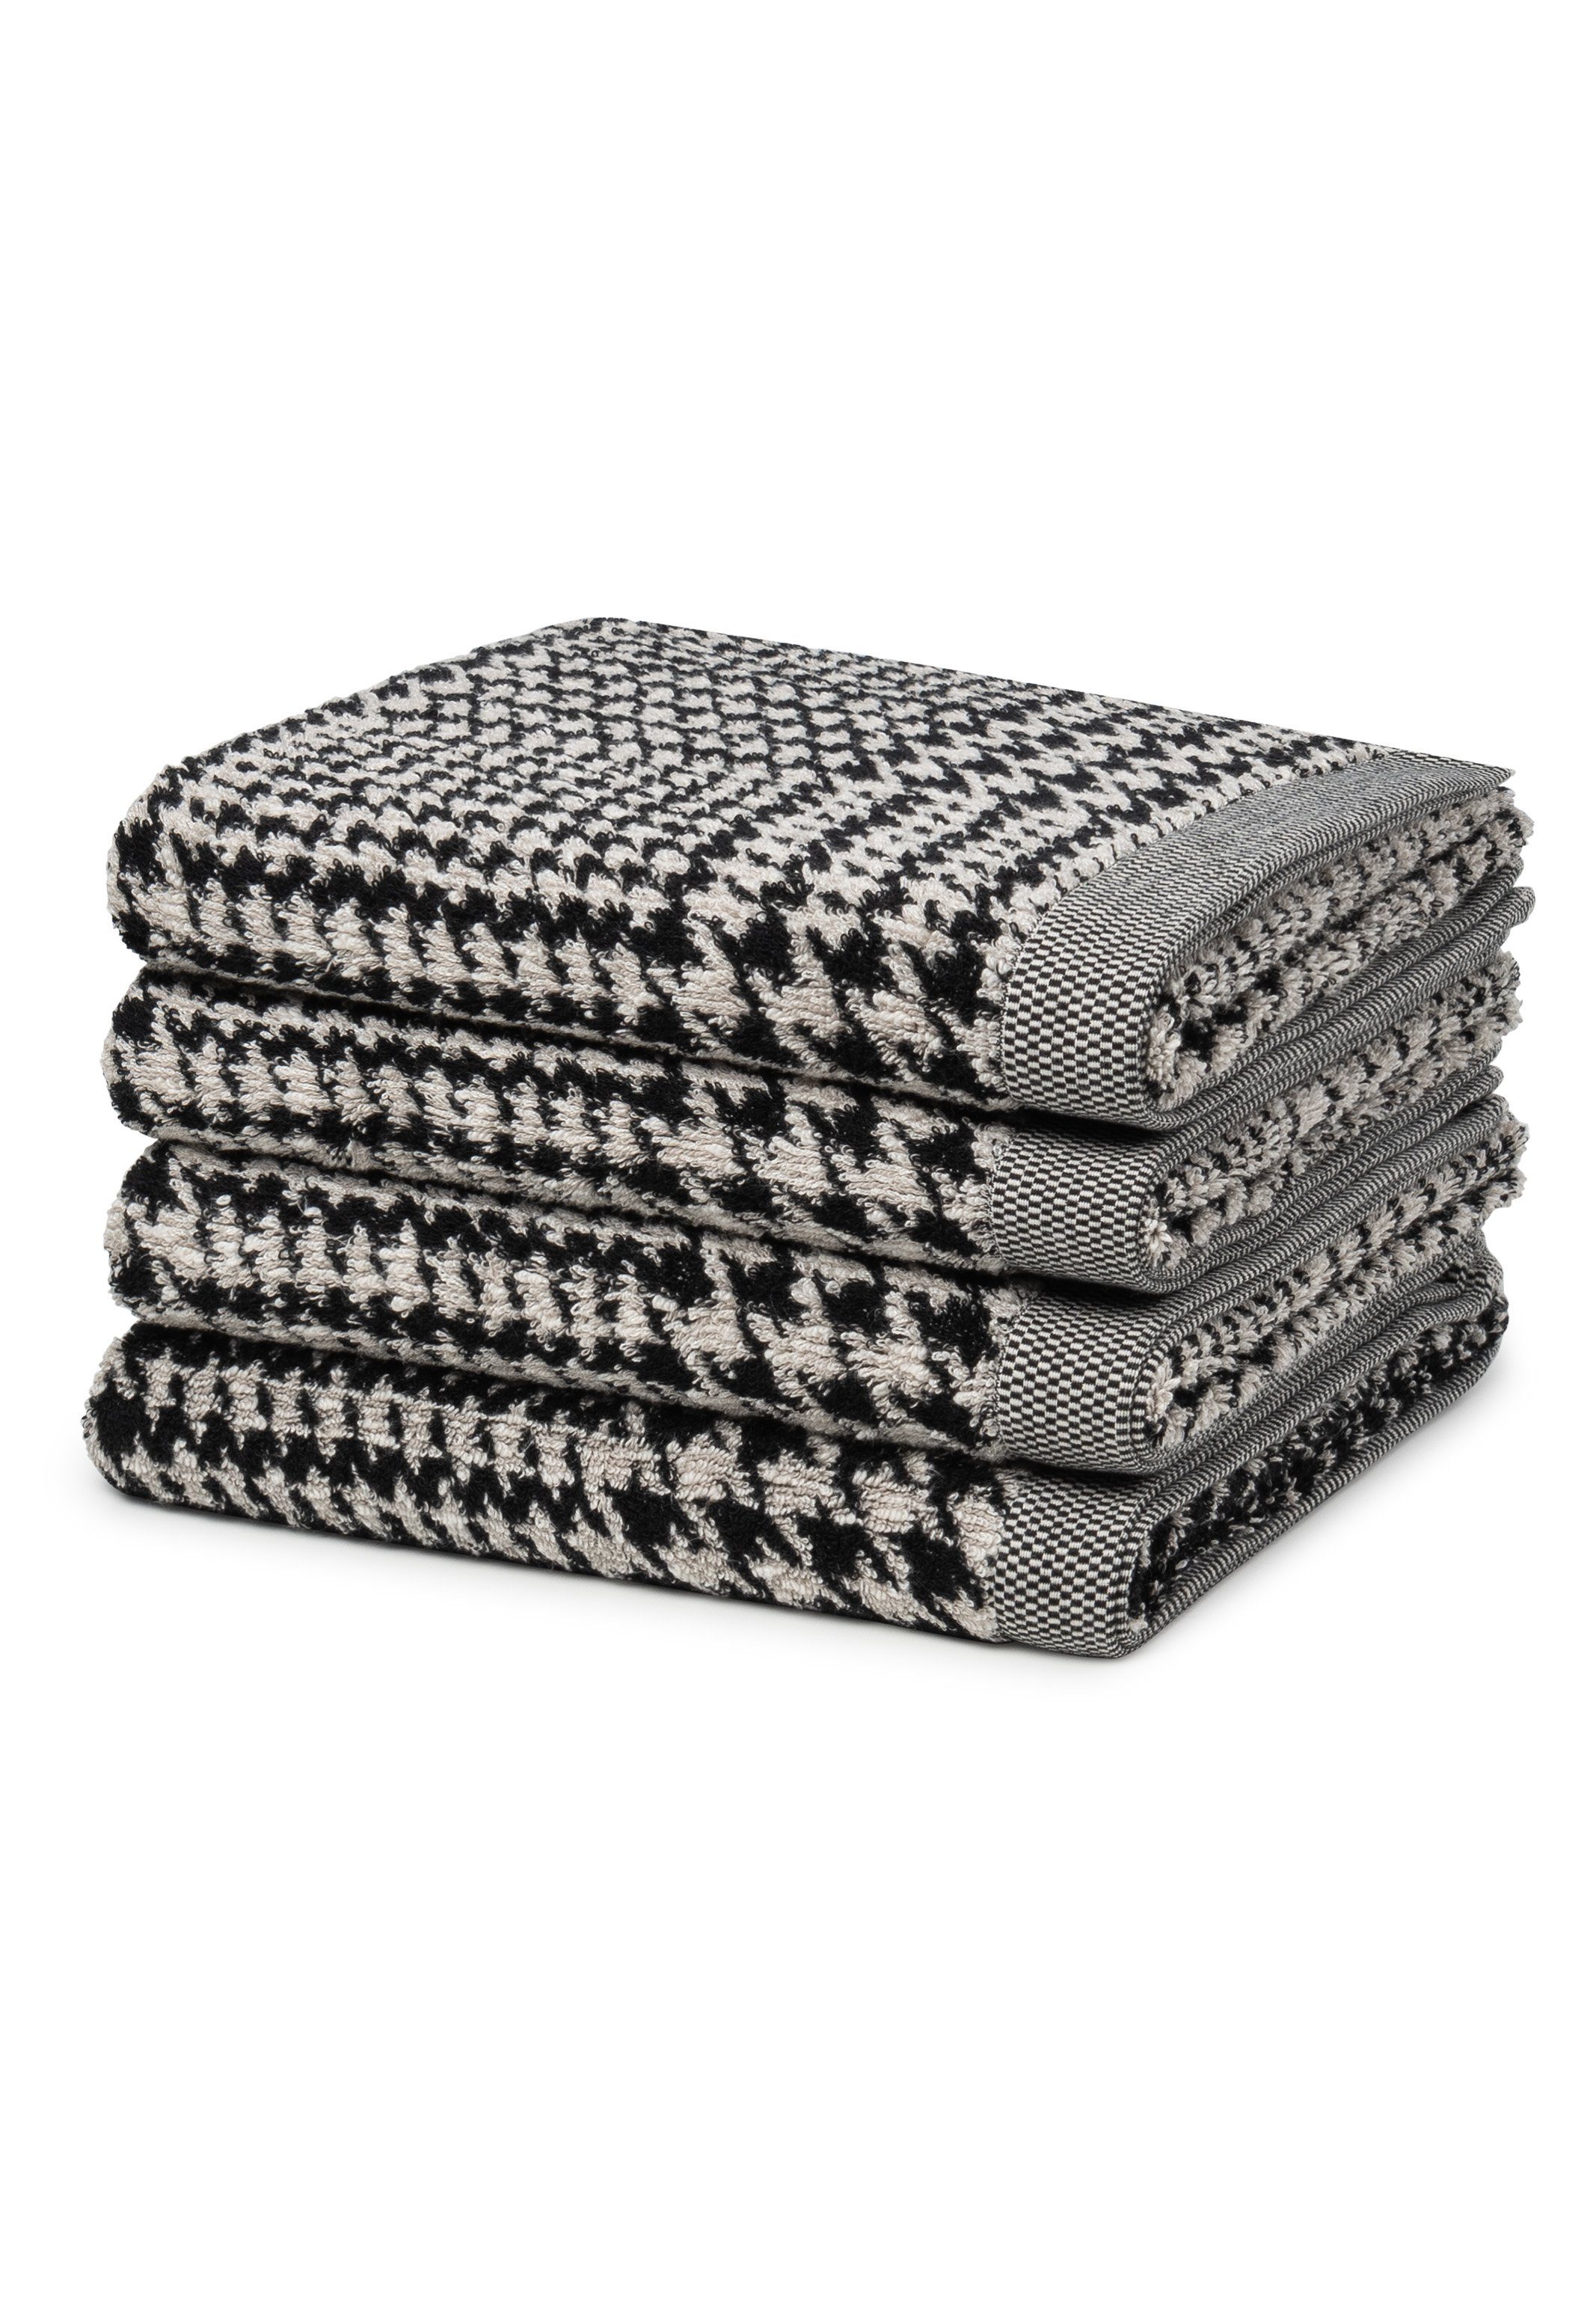 Möve Handtuch Set Brooklyn Glencheck, Baumwolle, (Spar-Set, 4-tlg), 4 X Handtuch - im Set - Baumwolle - Weicher Materialmix Nature/Black